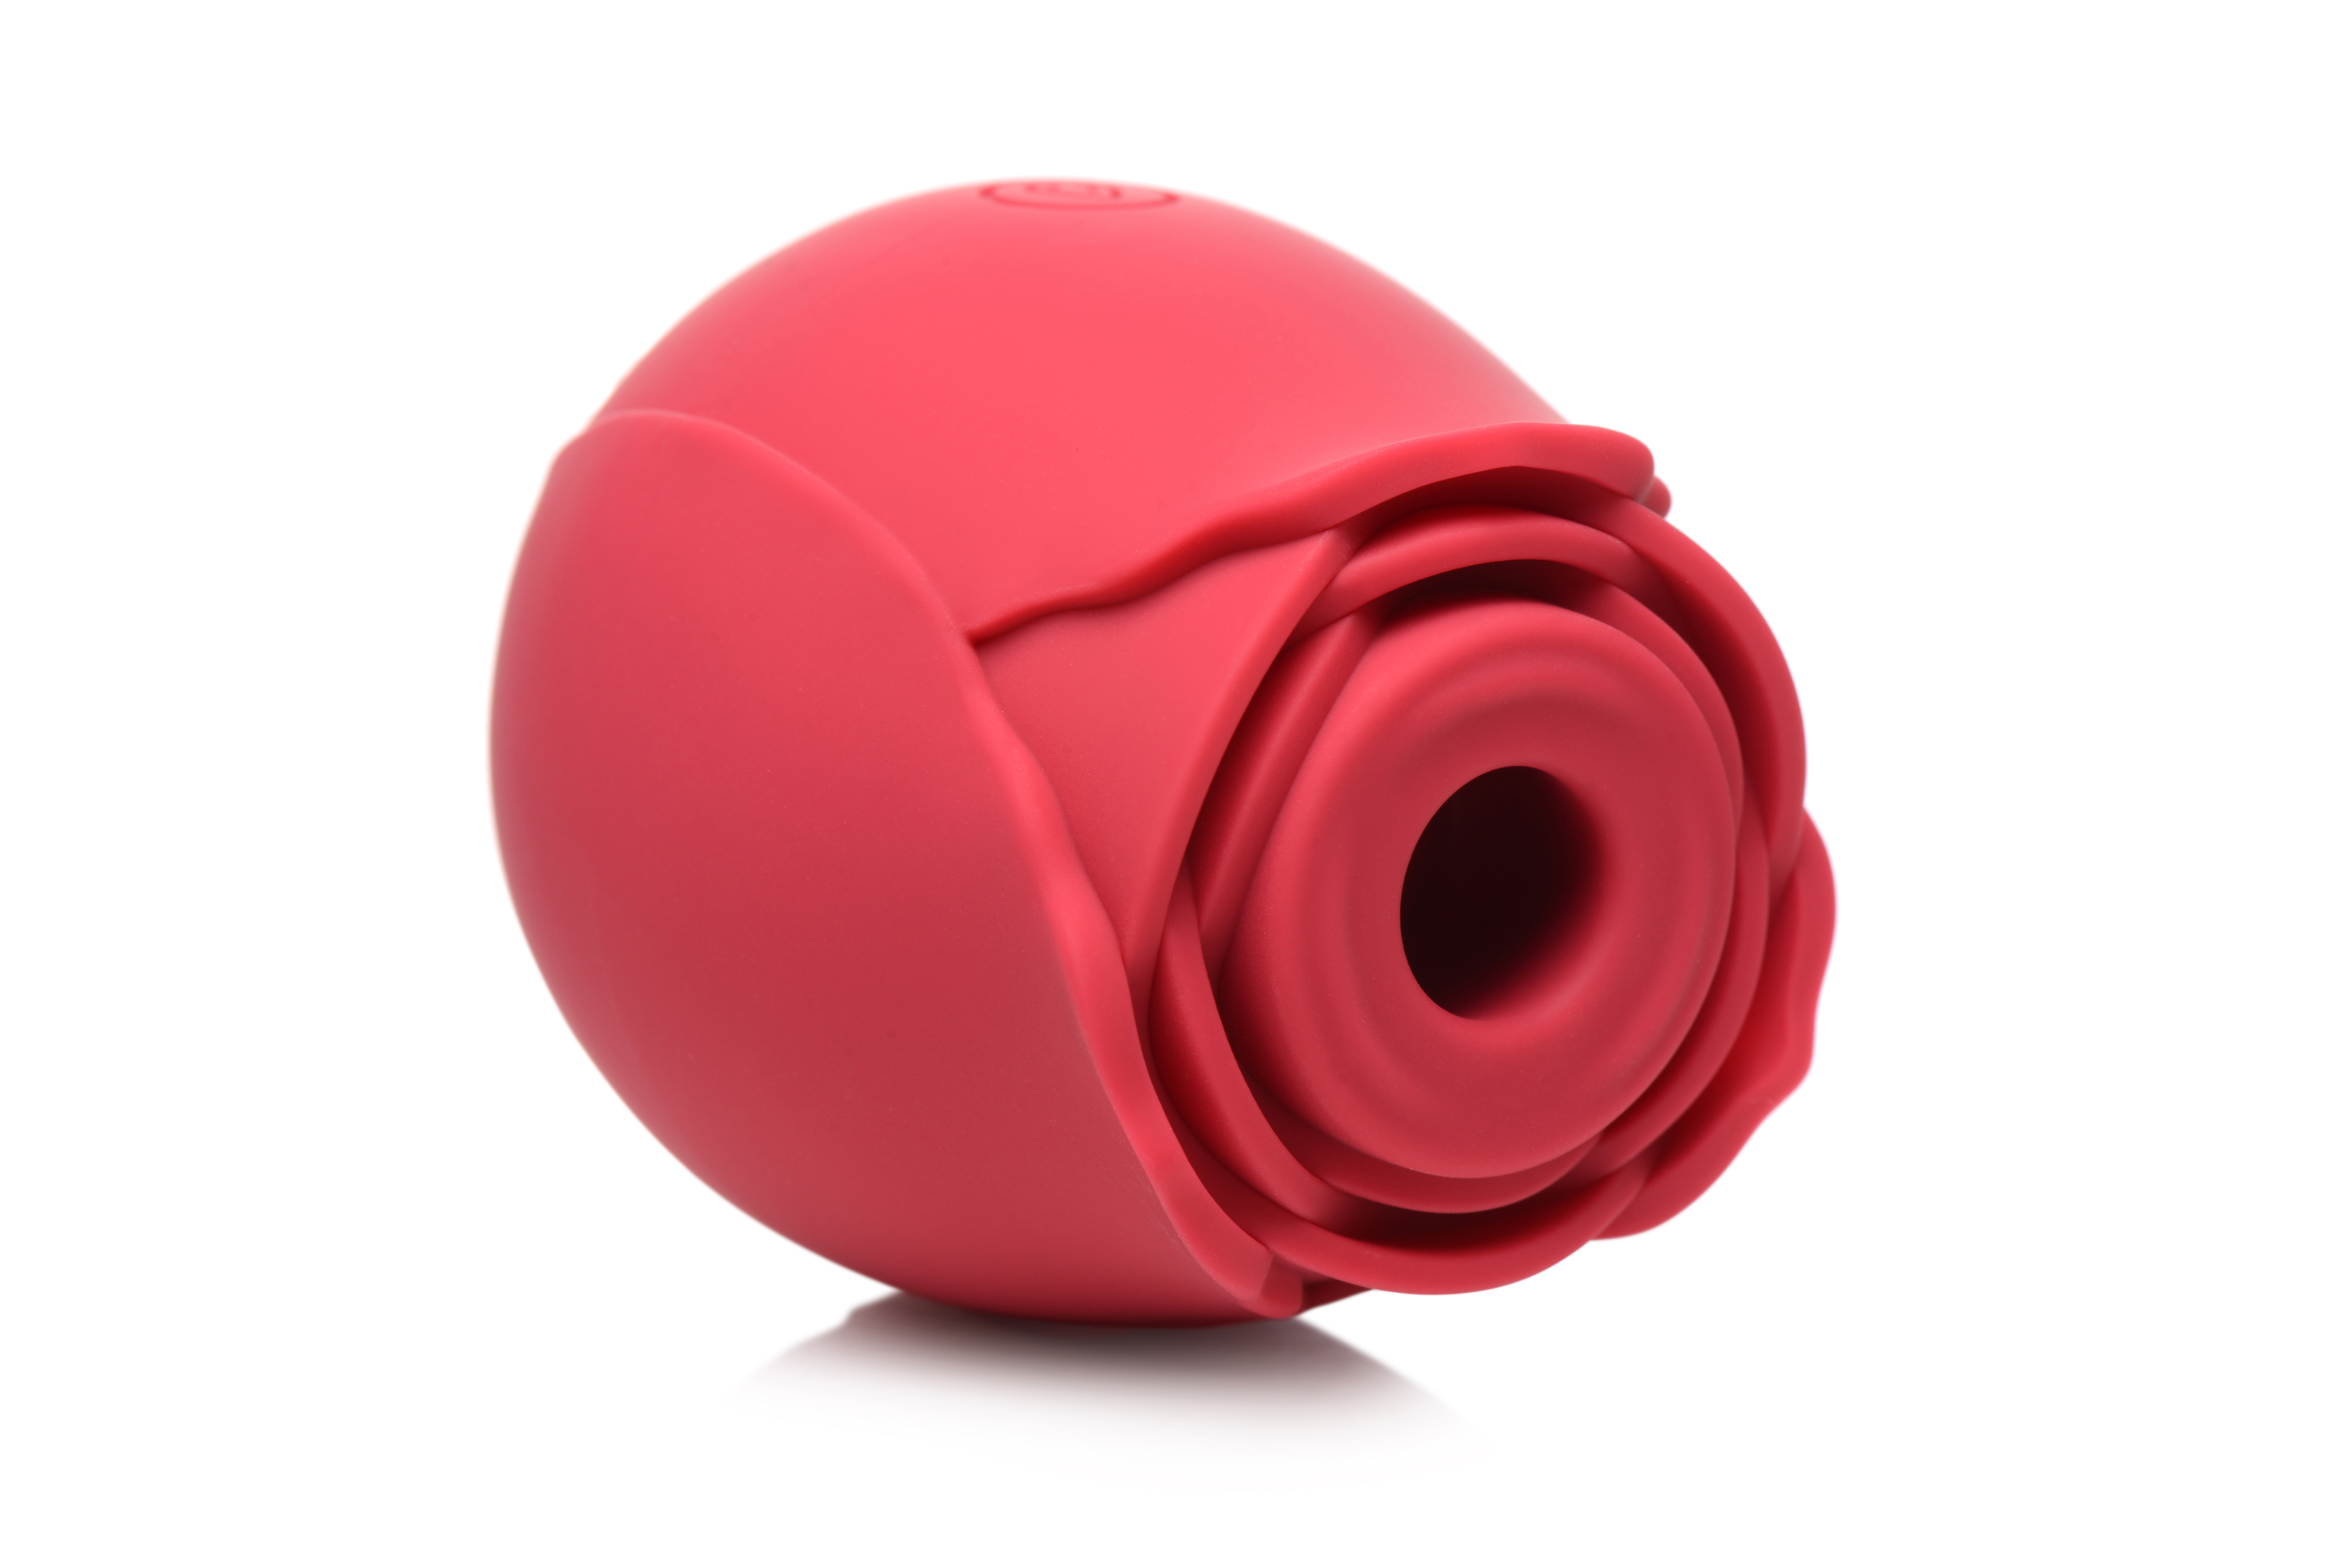 inmi bloomgasm wild rose silicone suction stimulator red 